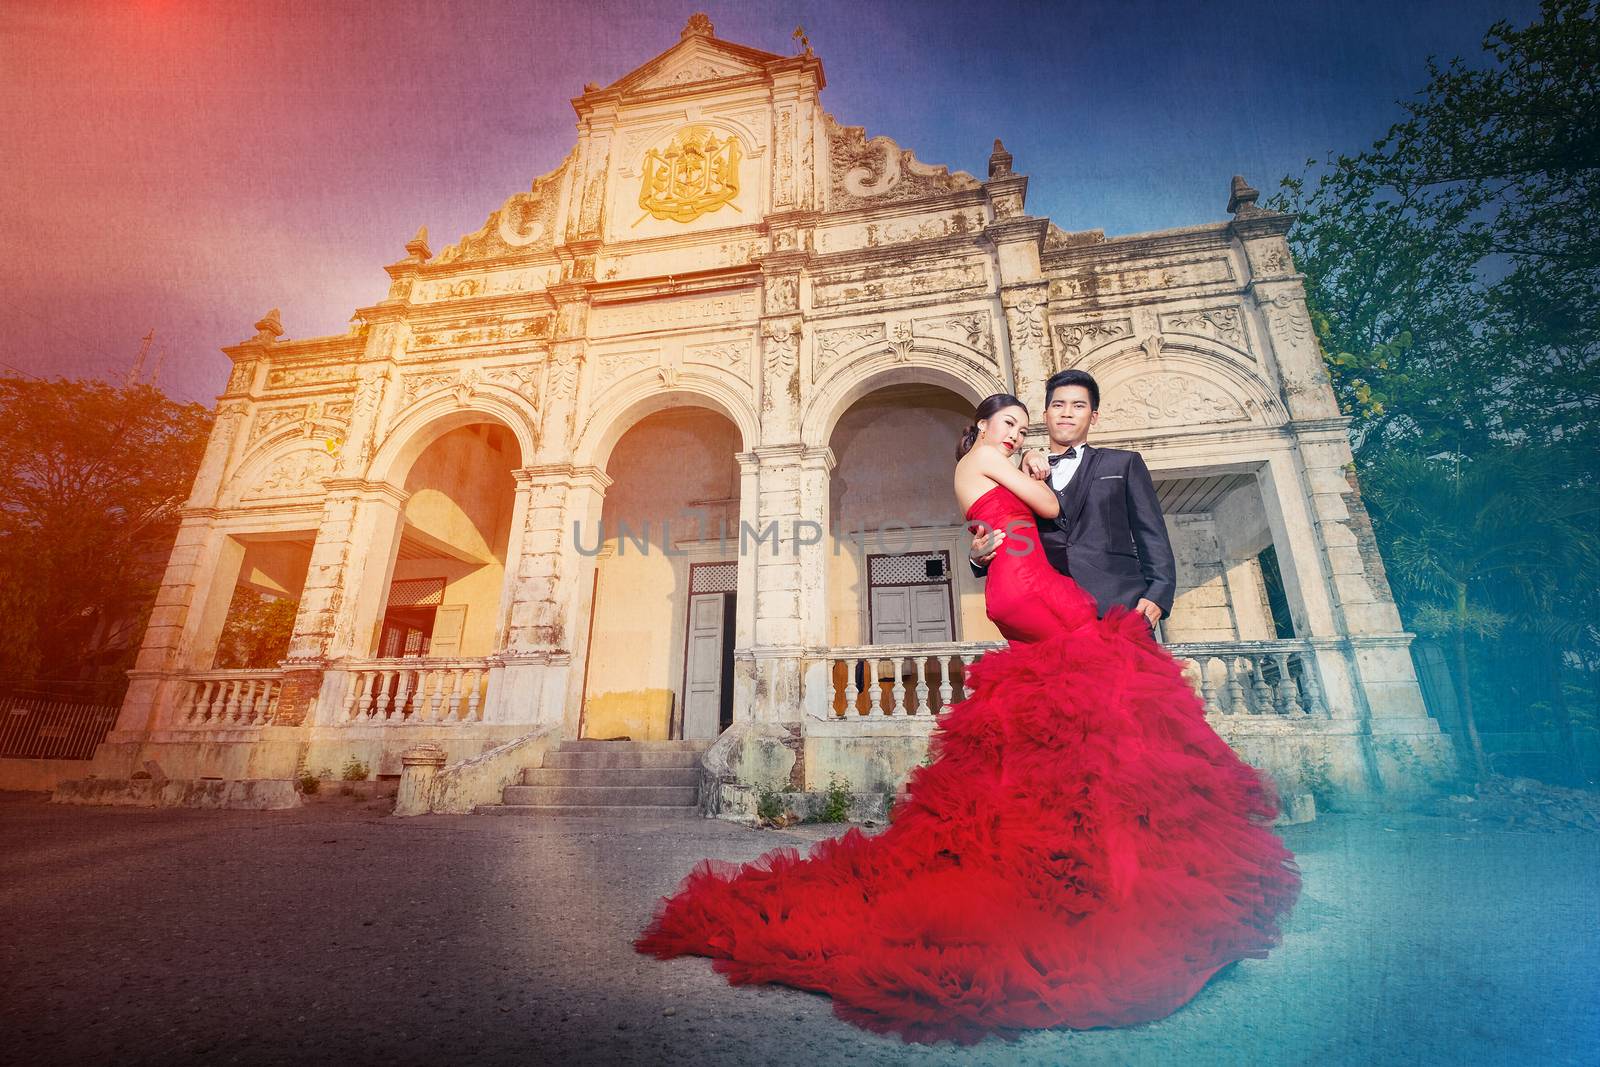 Man and Beautyful woman wearing fashionable red dress